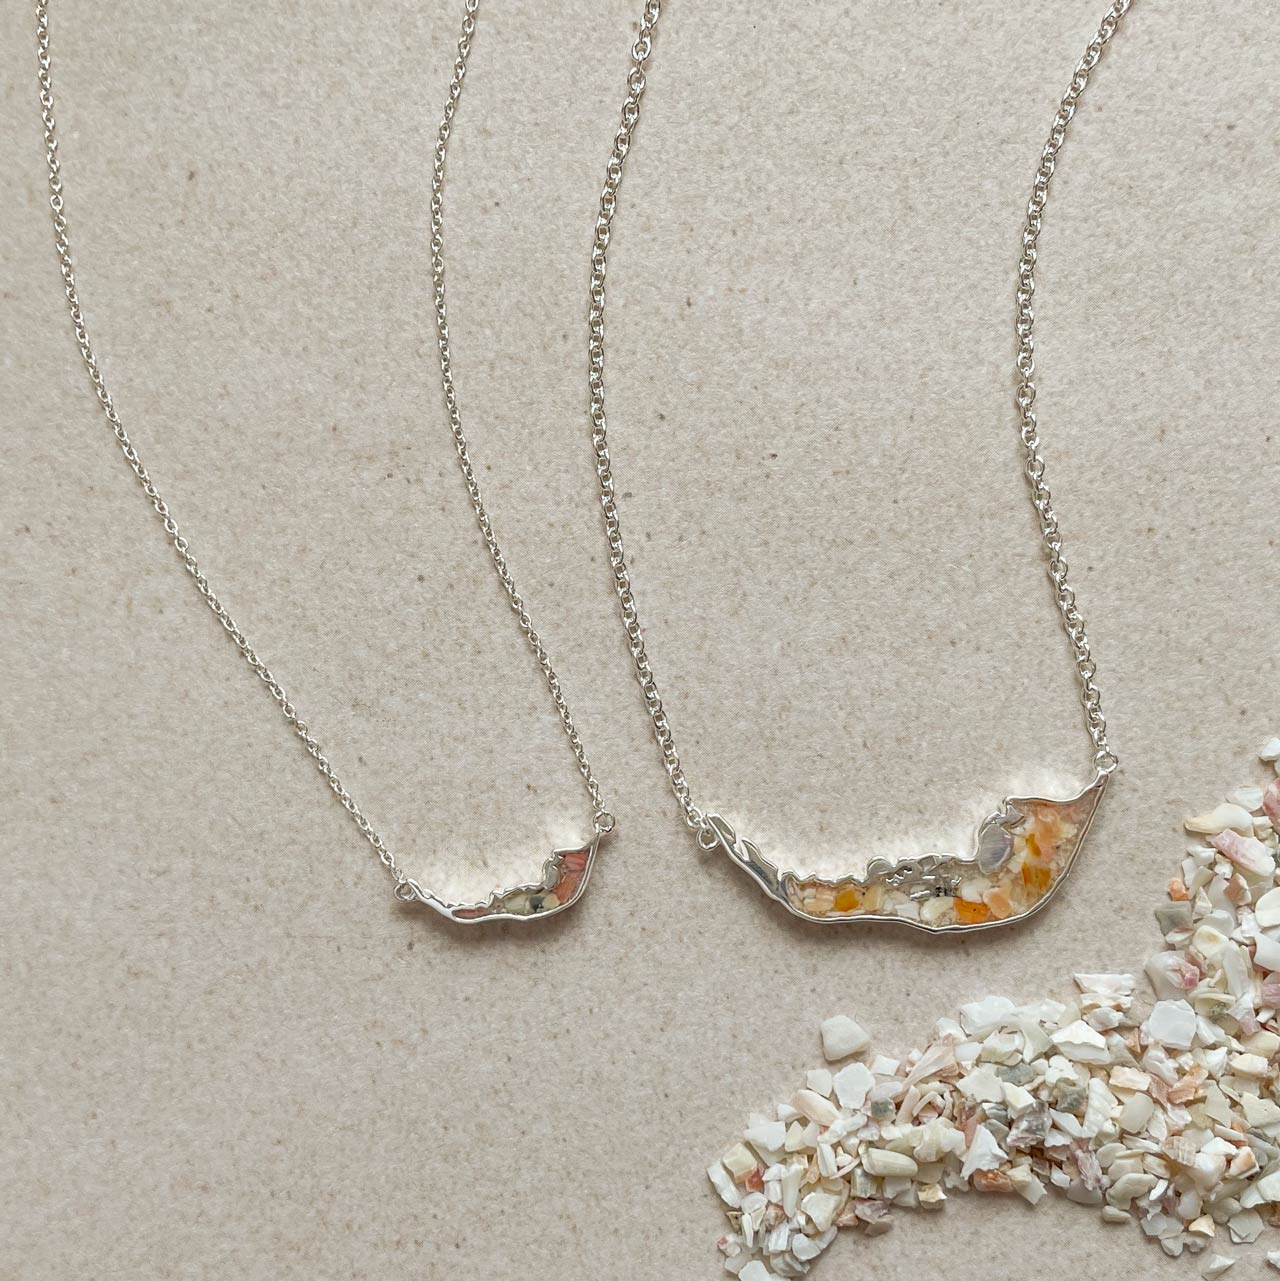 Suncatchers' Dream Sanibel Island Dune Personalized Jewelry Delicate Sanibel Island Necklace with beach sand from Sanibel.